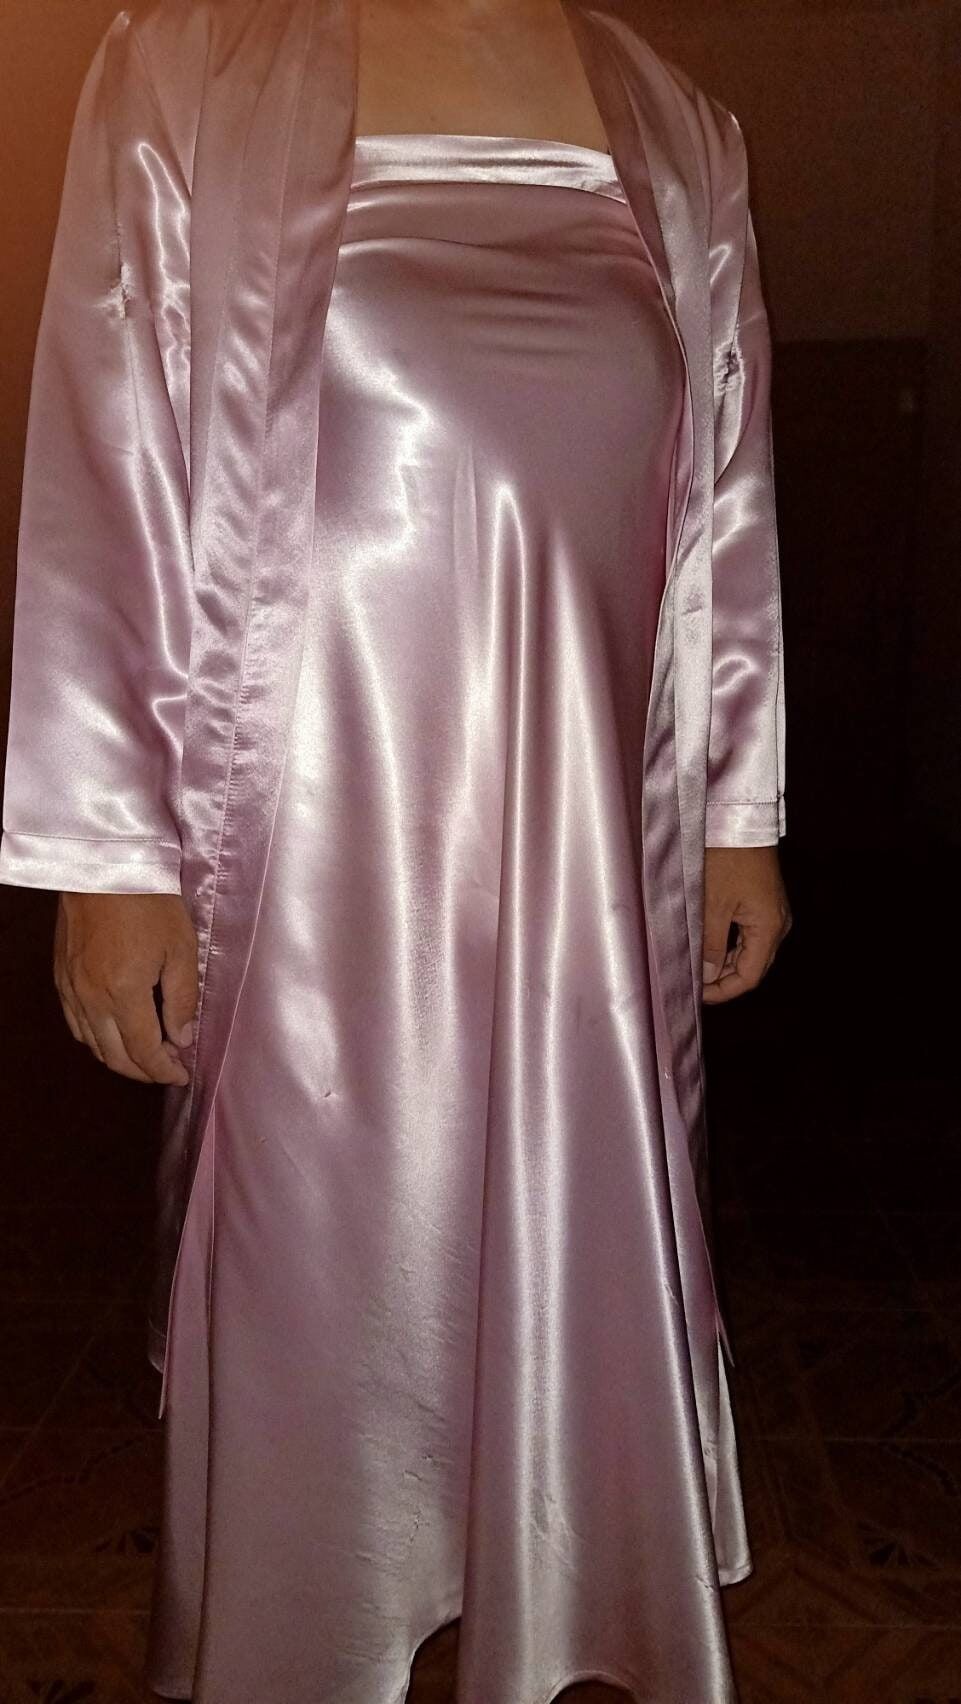 crossdress in nightgown satin #3